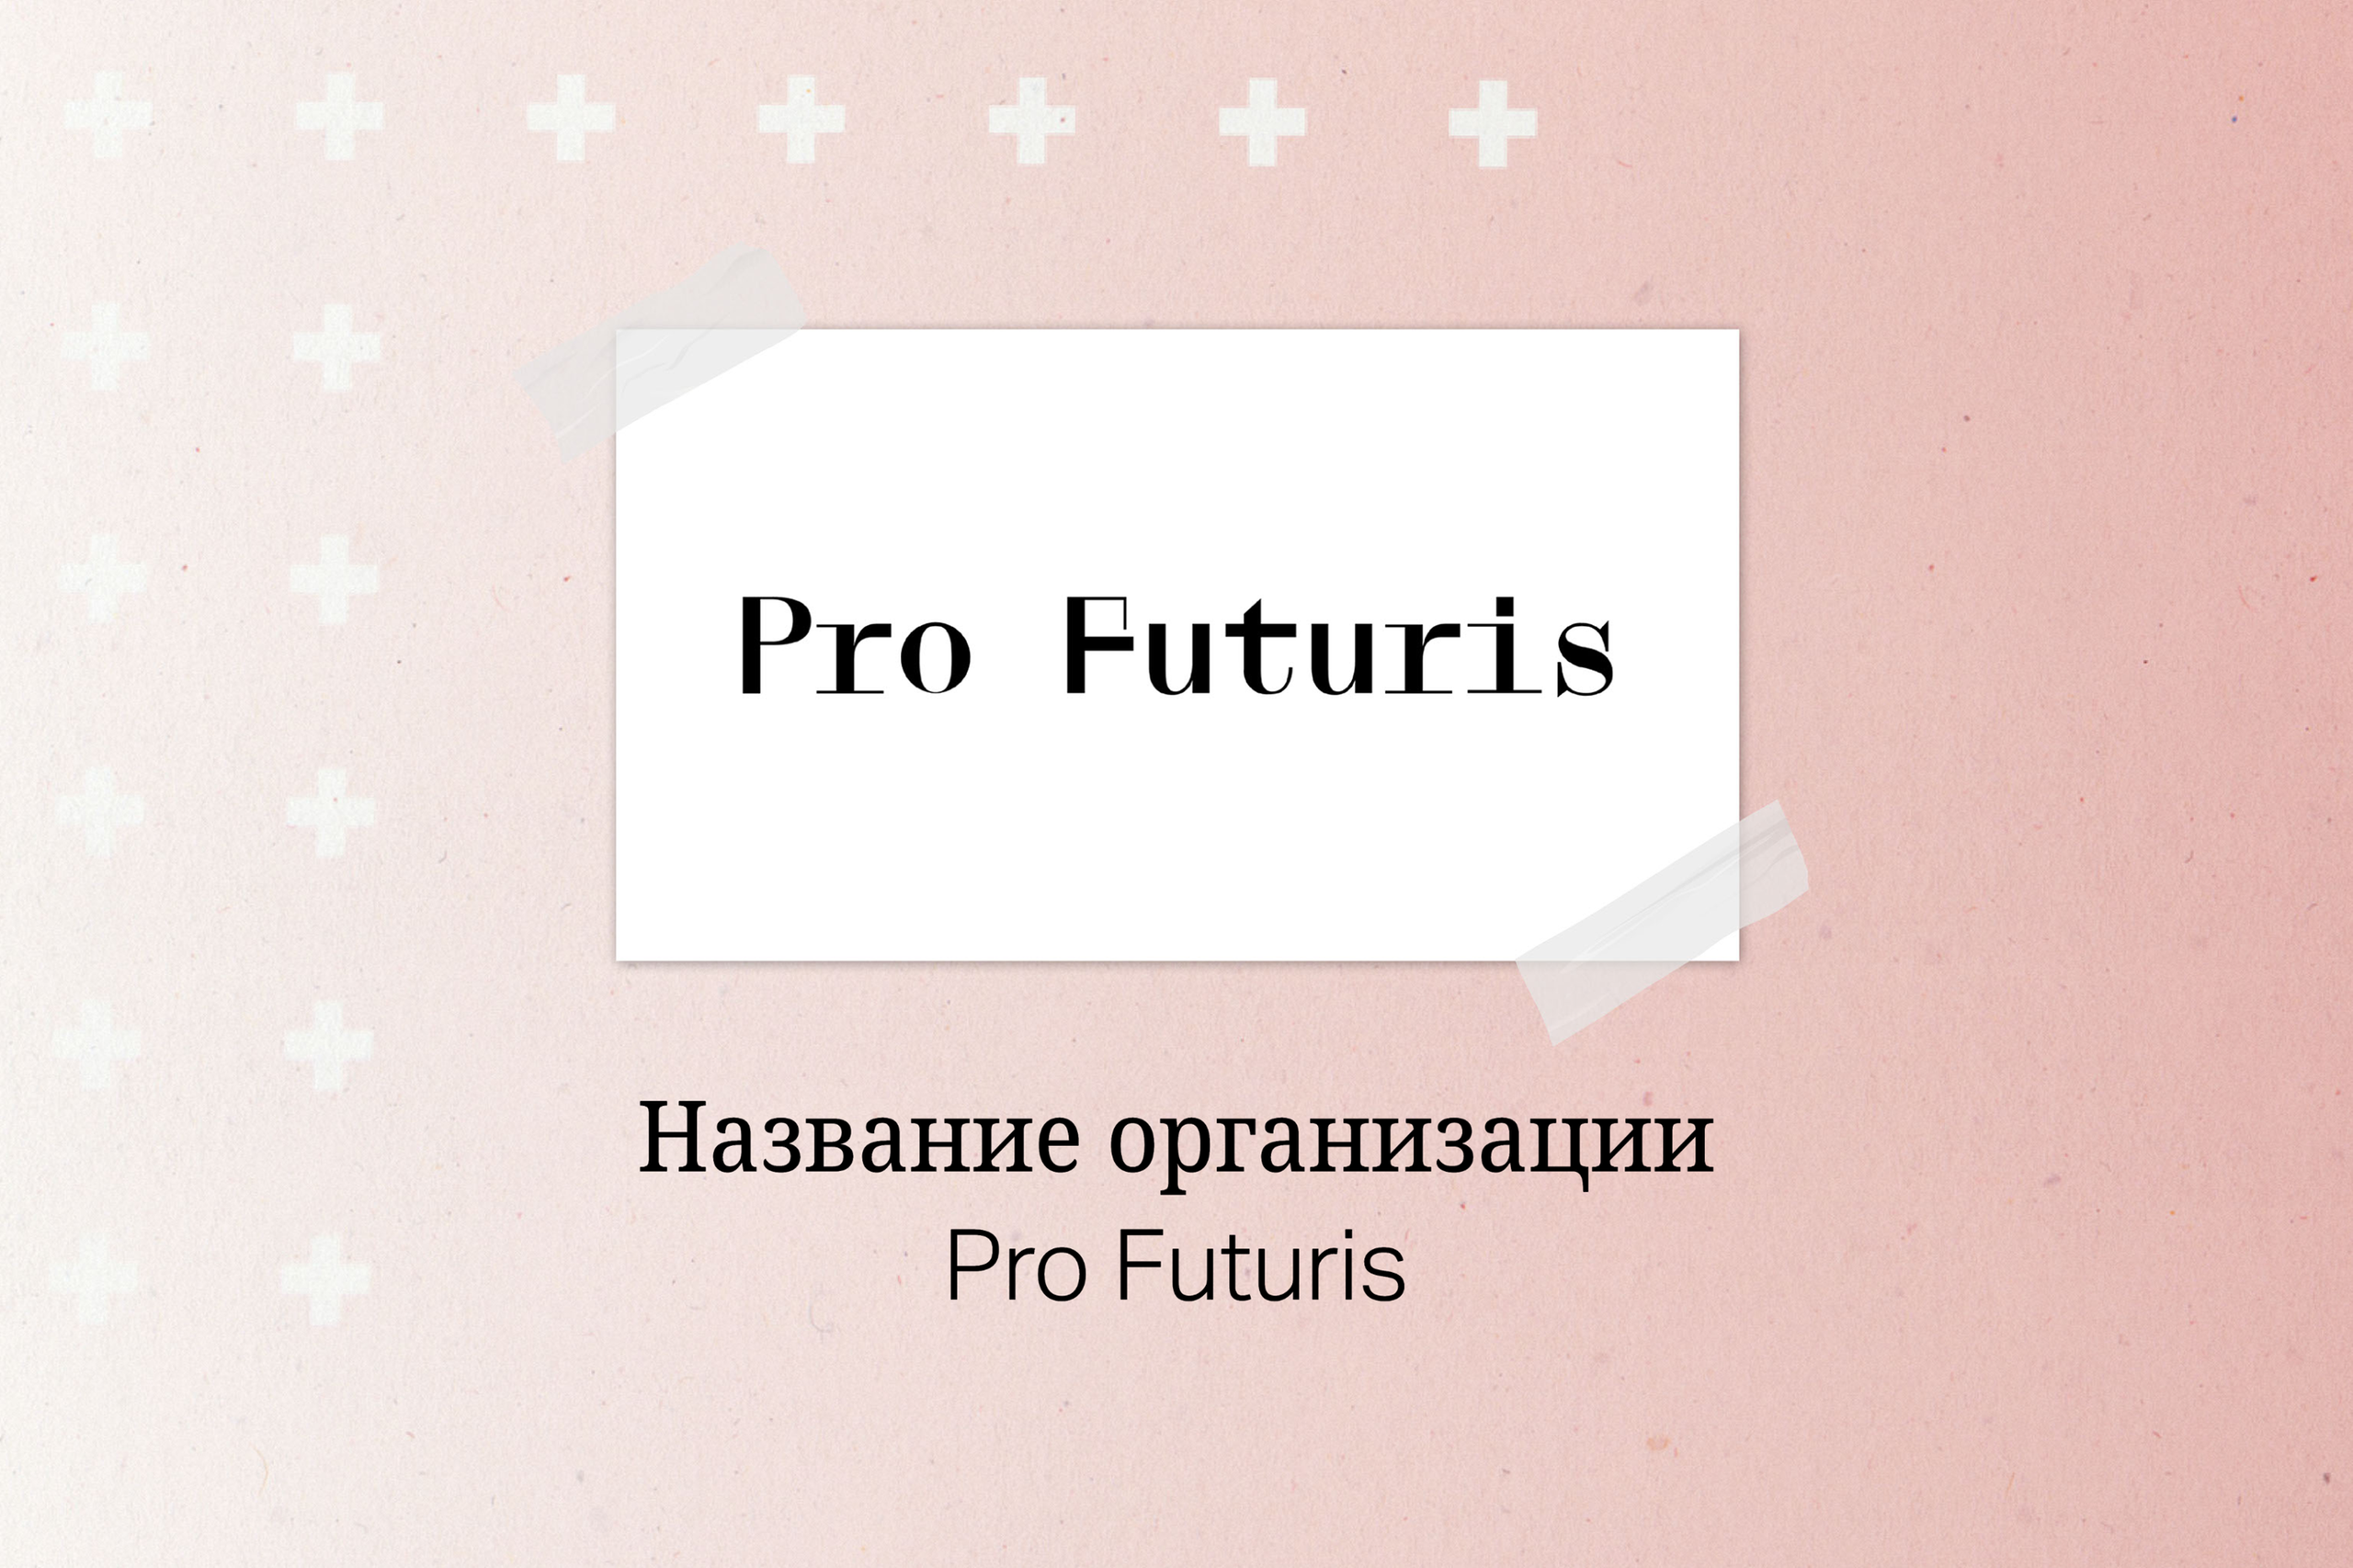 Pro Futuris